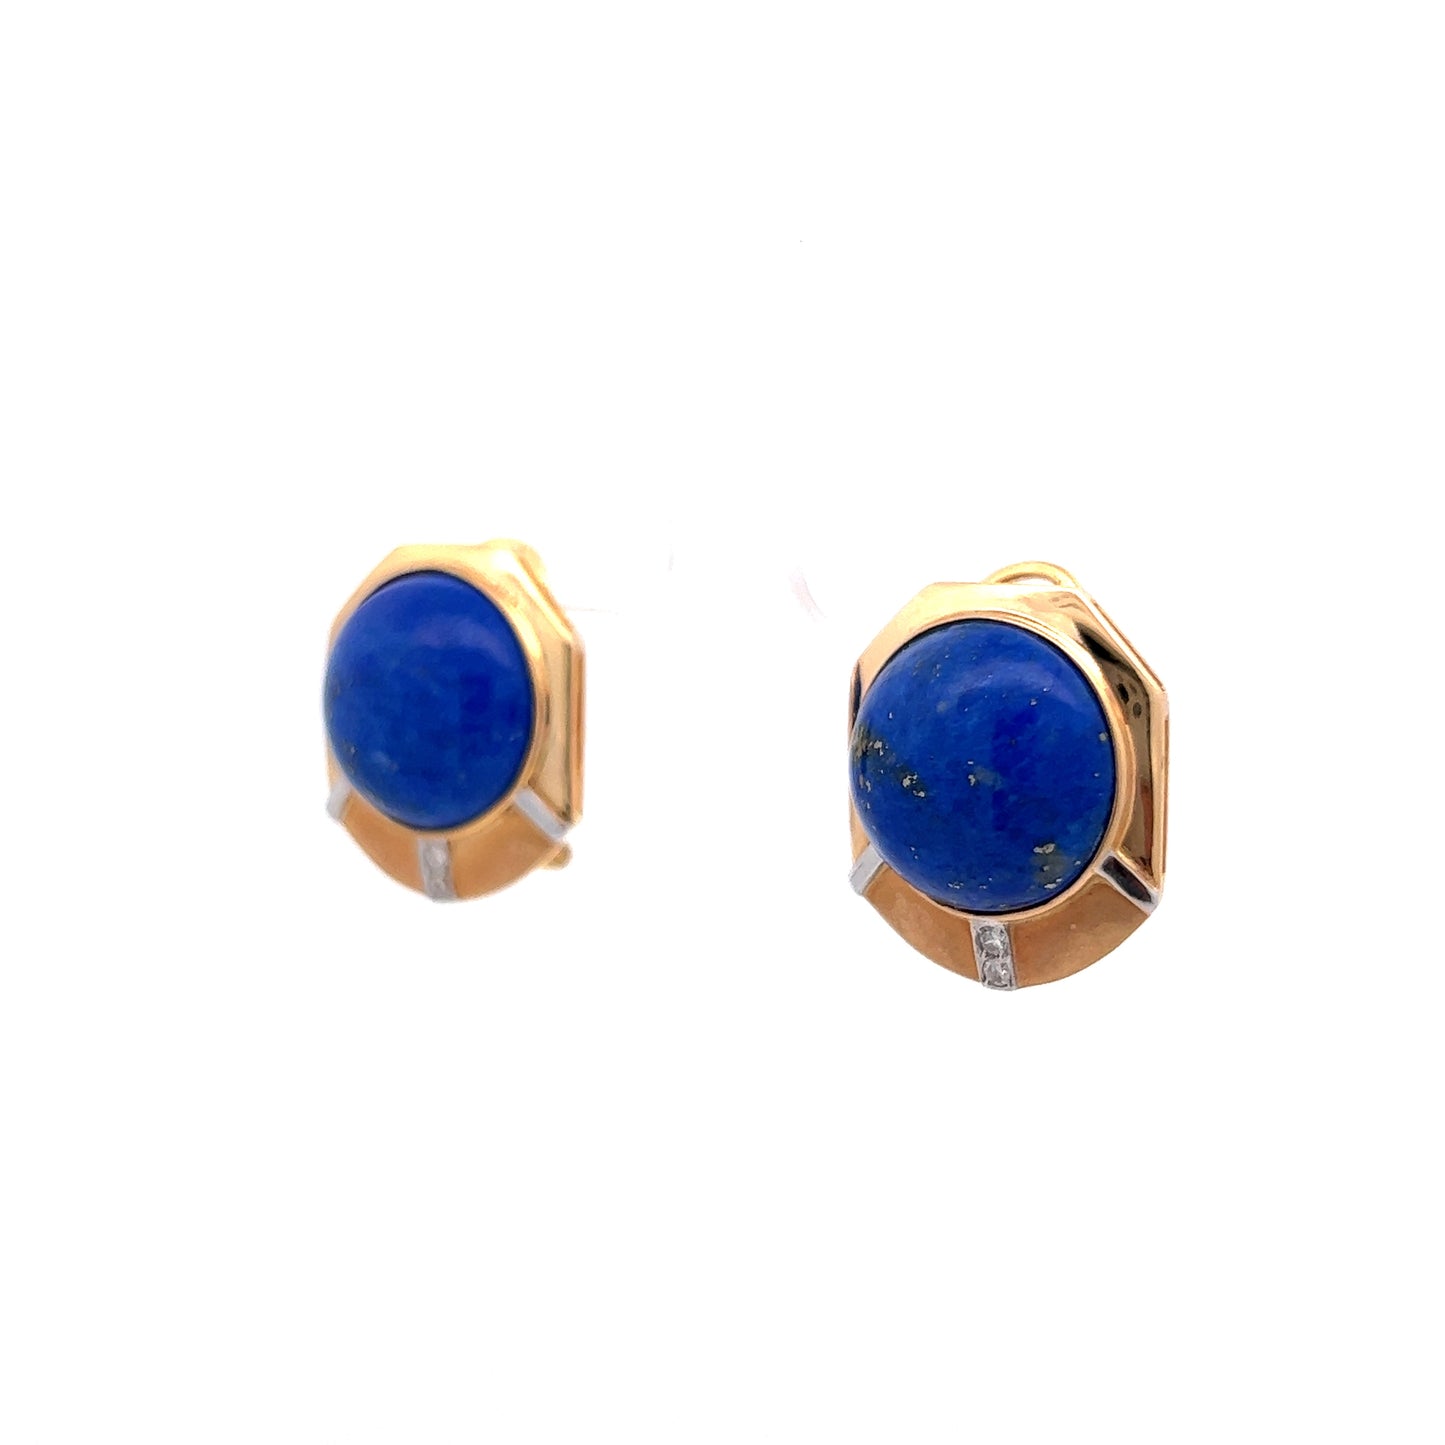 Cabochon Lapis Lazuli & Diamond Earrings in 14k Yellow Gold